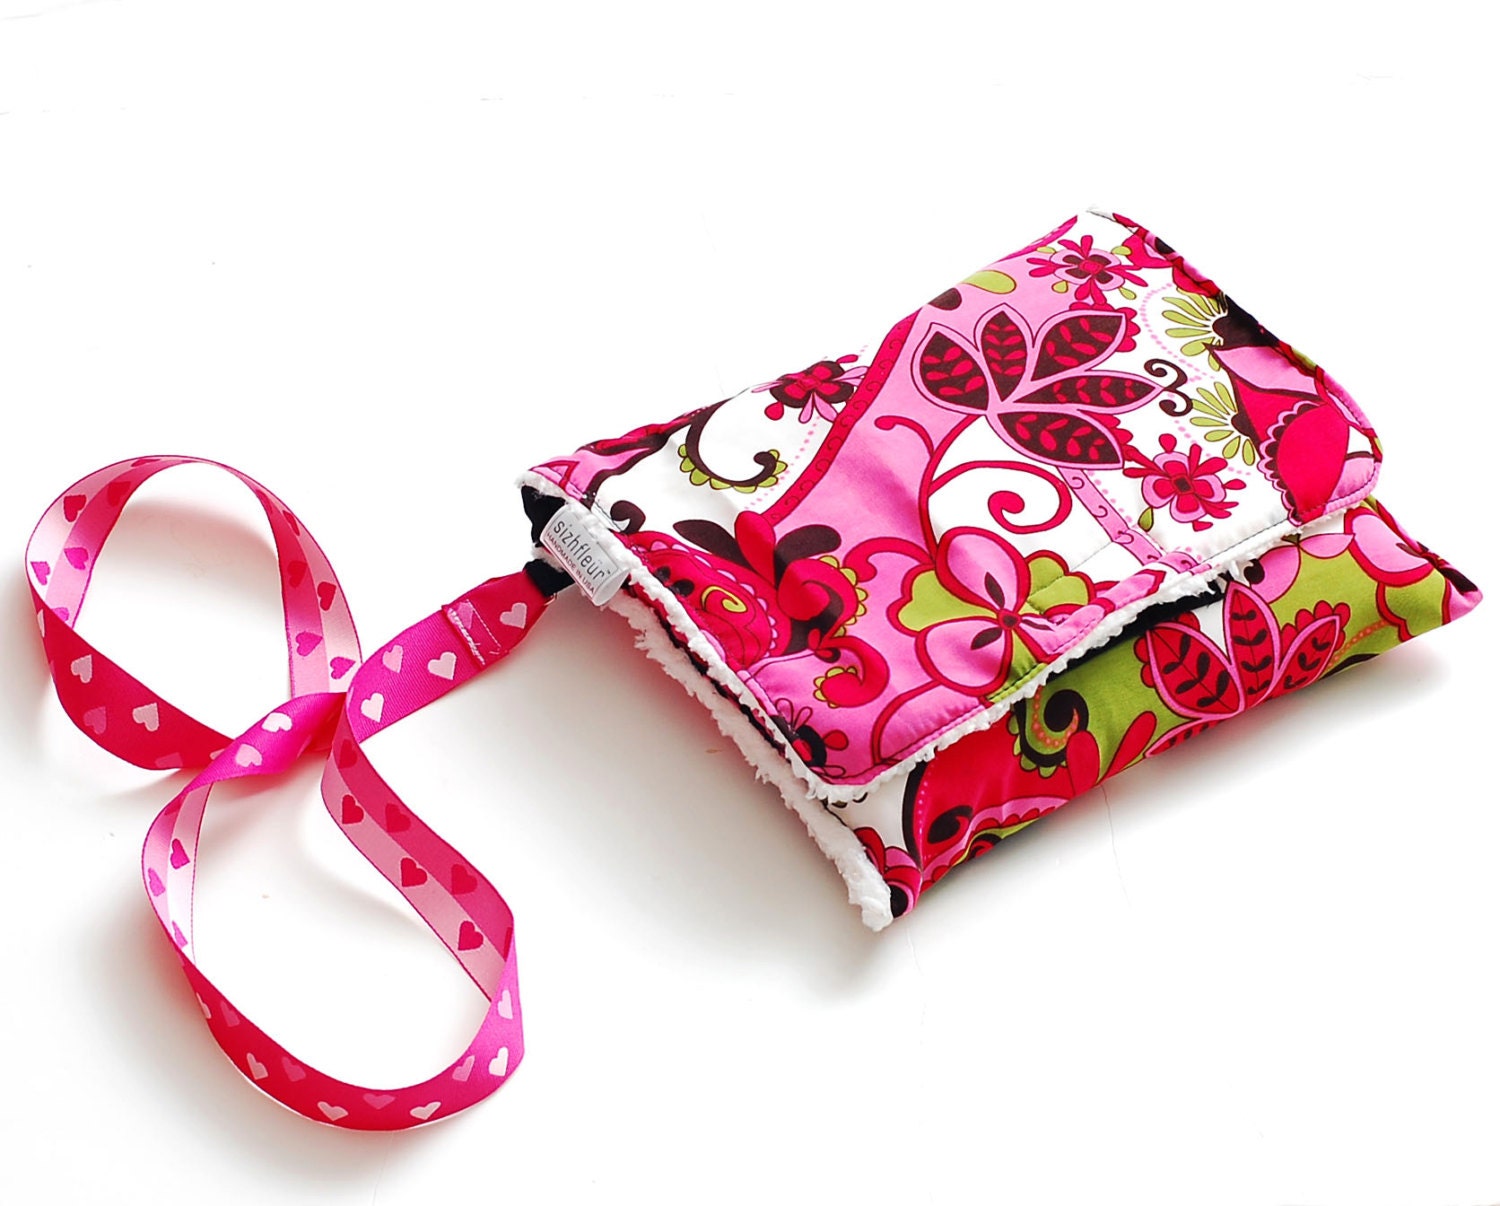 iPad Mini Case / i Pad Mini Cover / iPad Mini Sleeve - Totally Pink for Girls